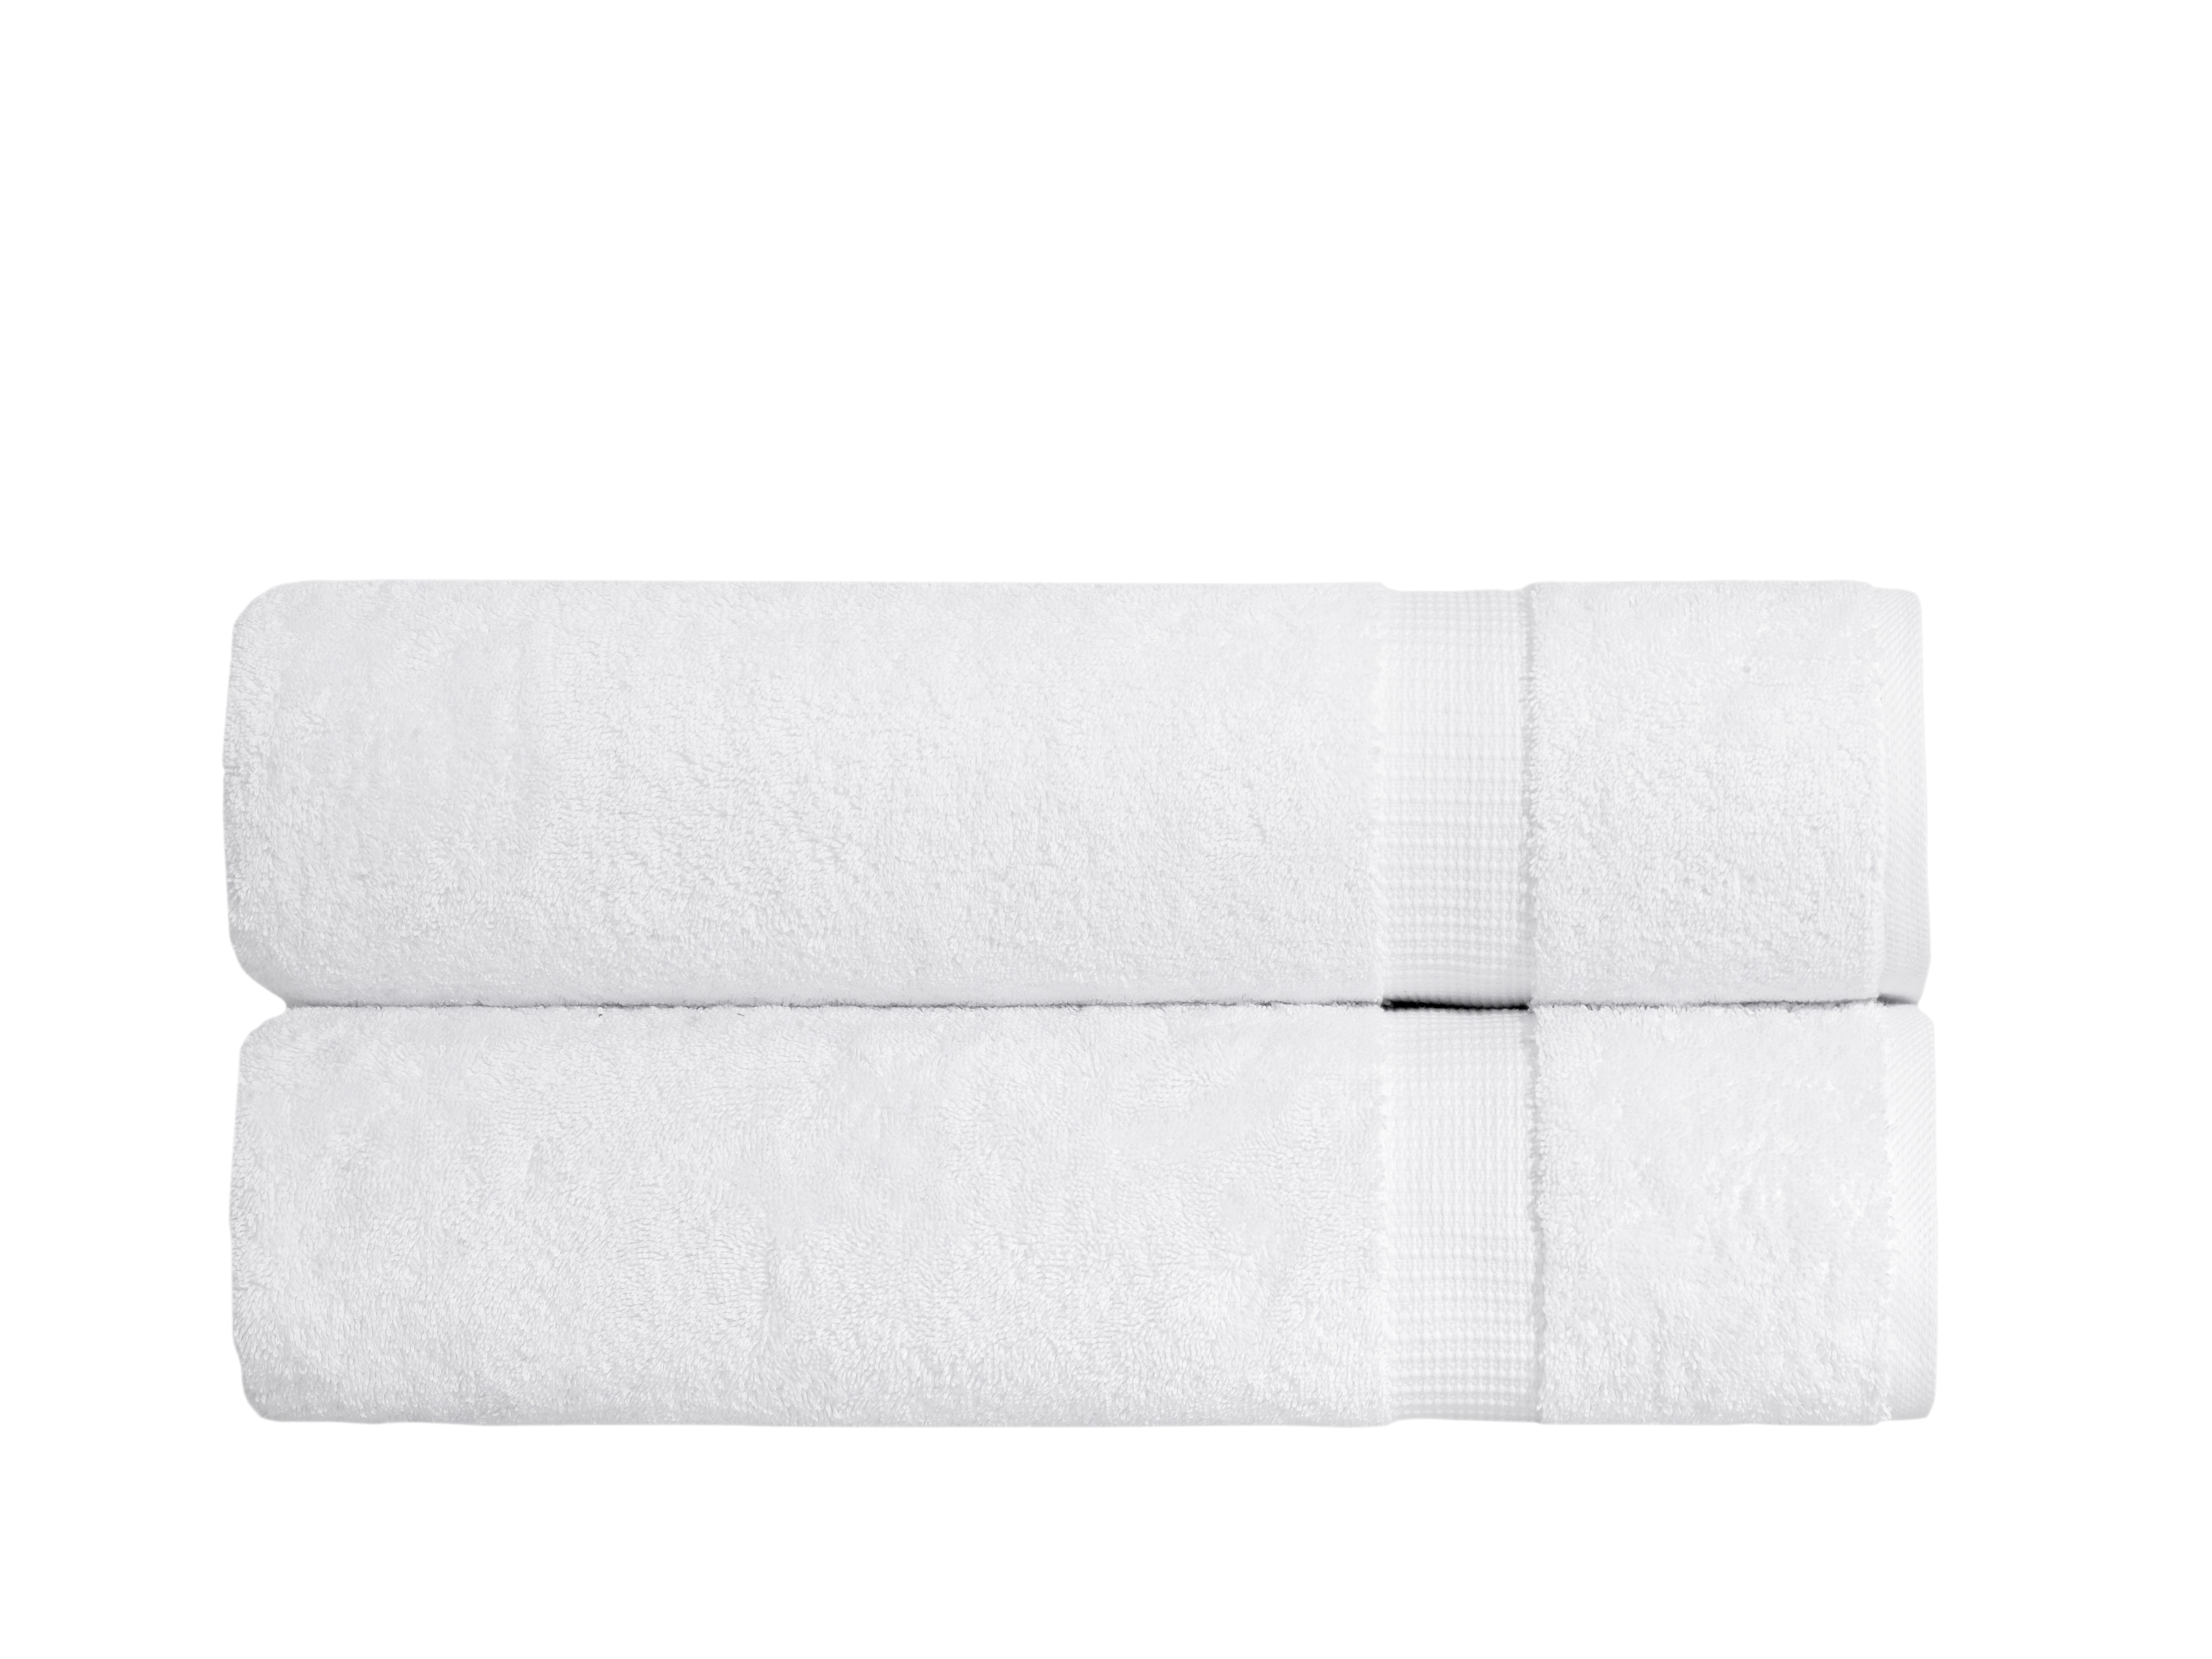 4 white bath sheets large towel size 30x60 turkish cotton soft feel lightweight 